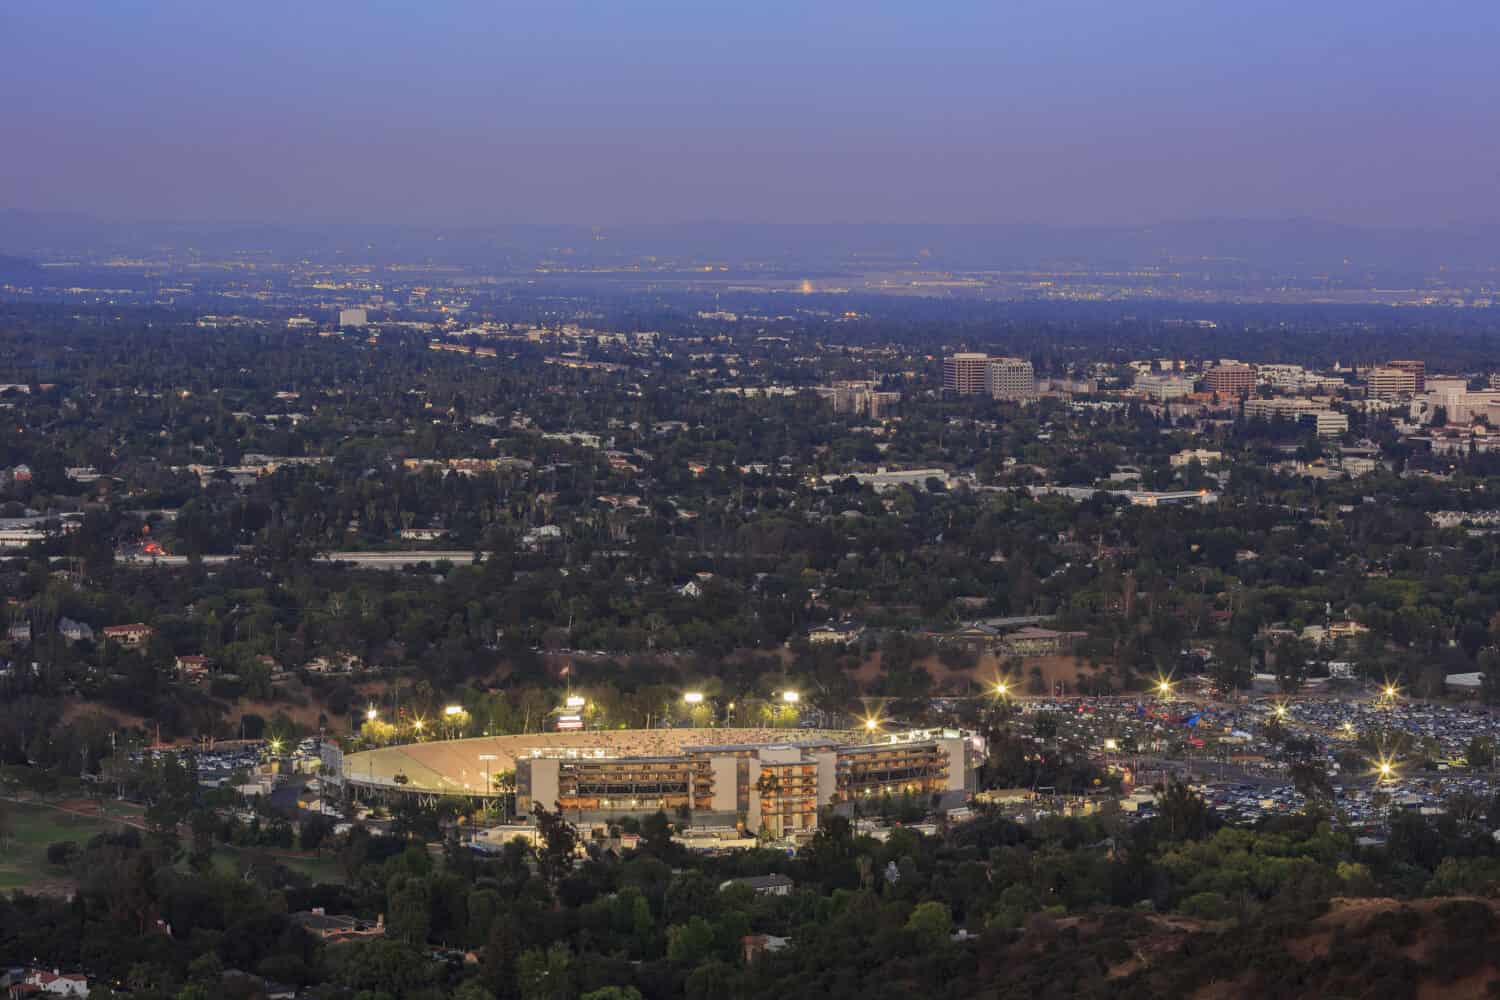 The beautiful Rose Bowl, Pasadena City hall and Pasadena downtown view around twilight time